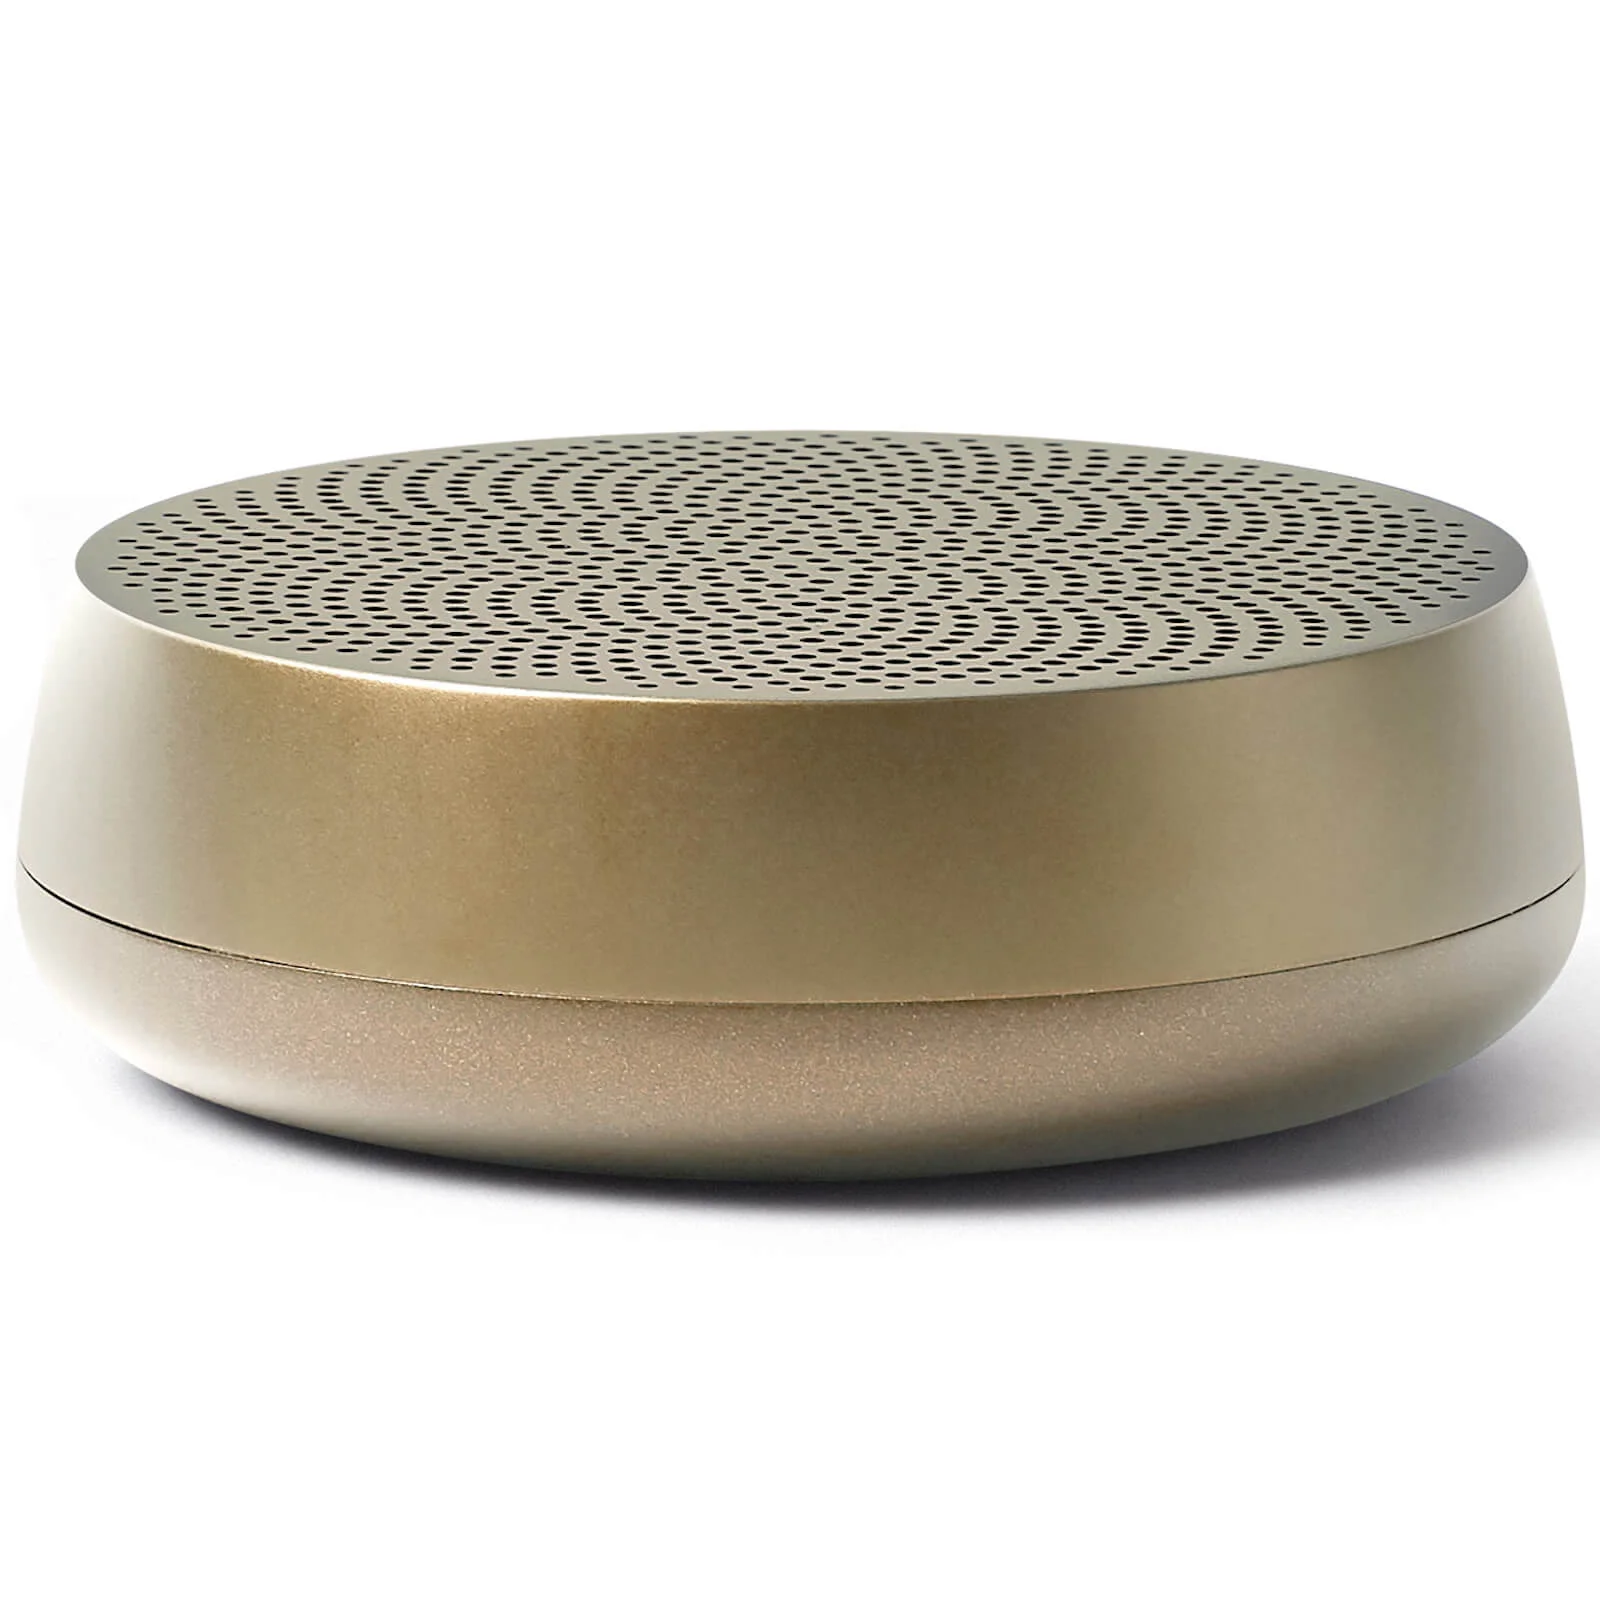 Lexon MINO L Bluetooth Speaker - Light Gold Image 1